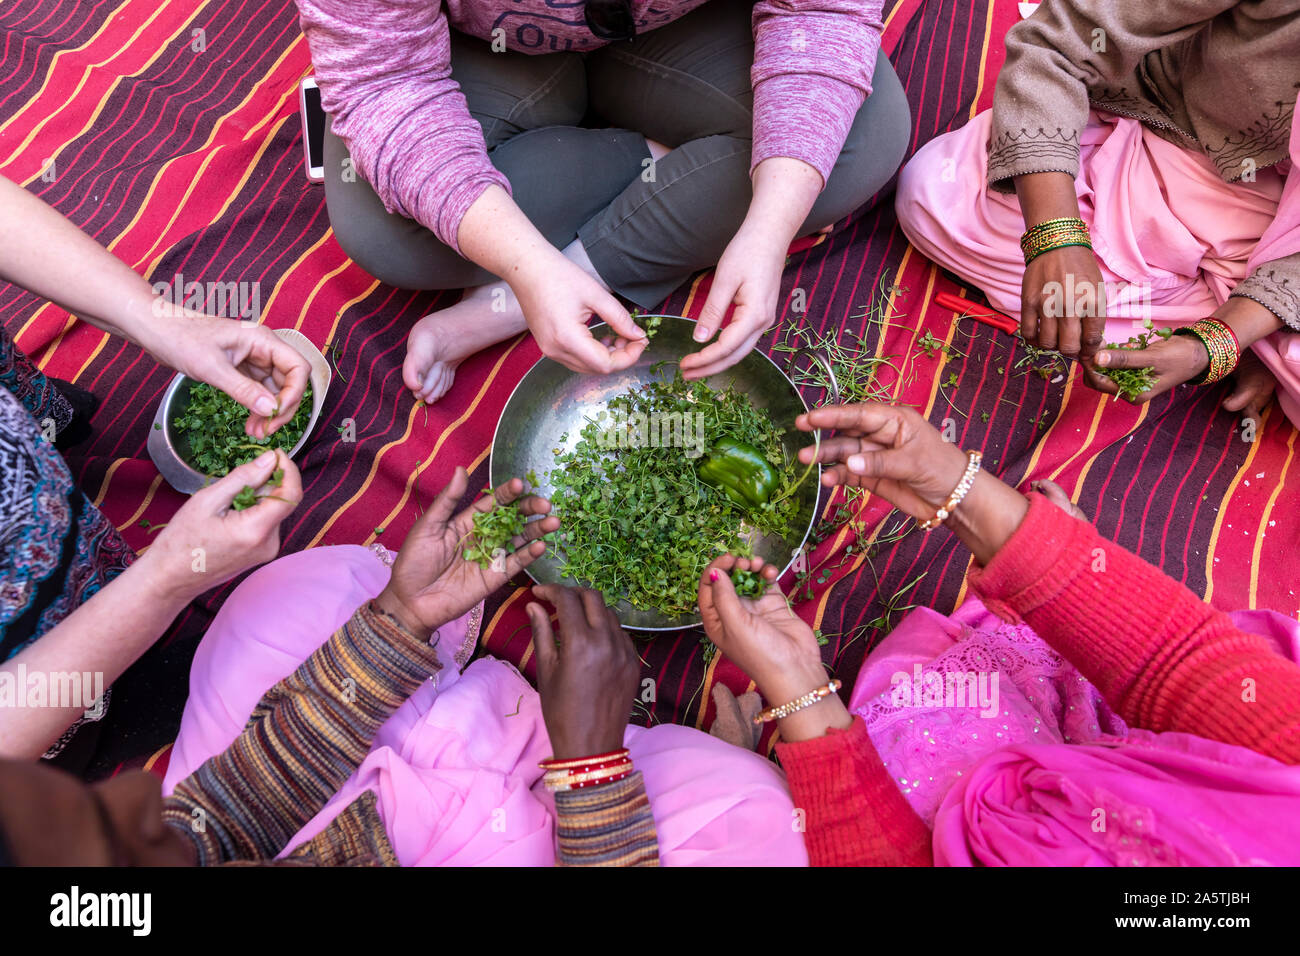 A detail shot of diverse women's hands preparing cilantro. Stock Photo